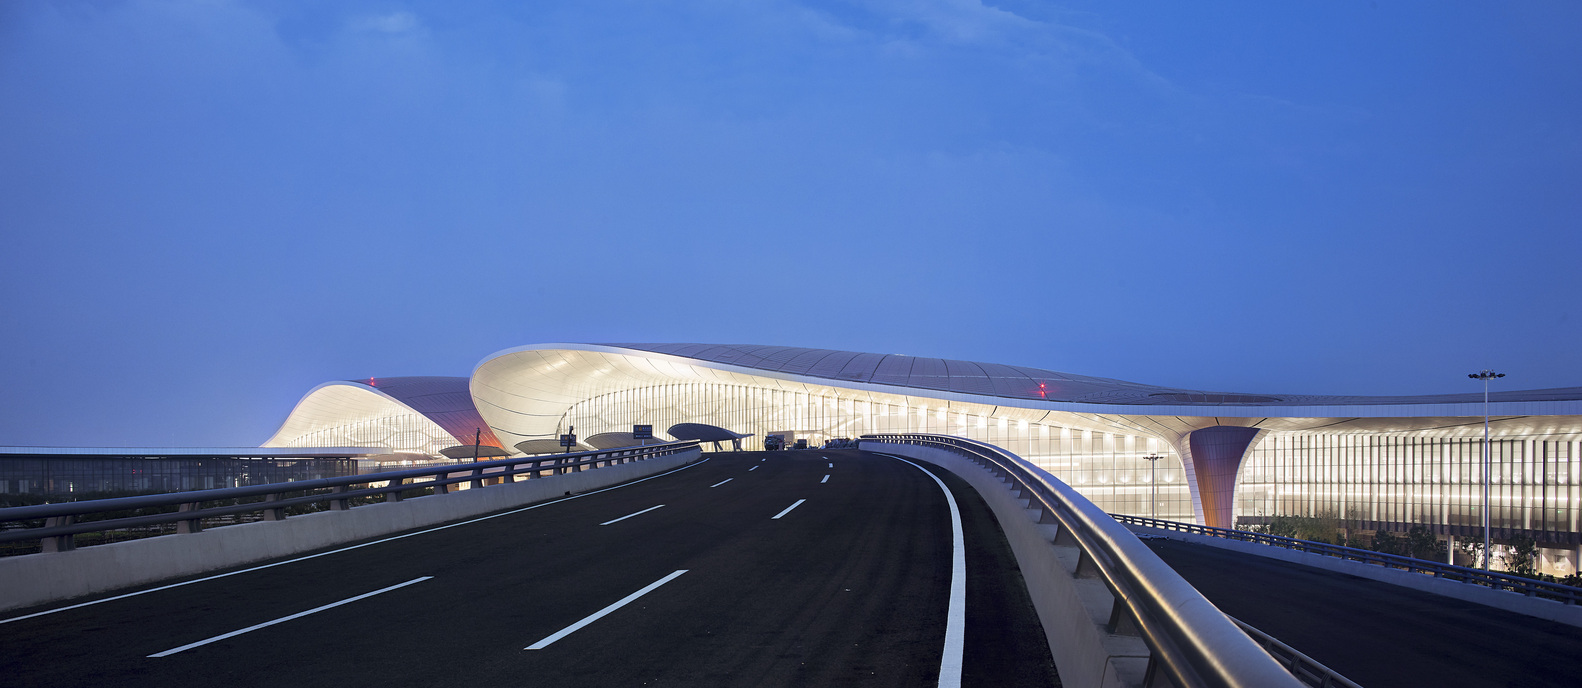 Beijing Daxing International Airport | Zaha Hadid Architects